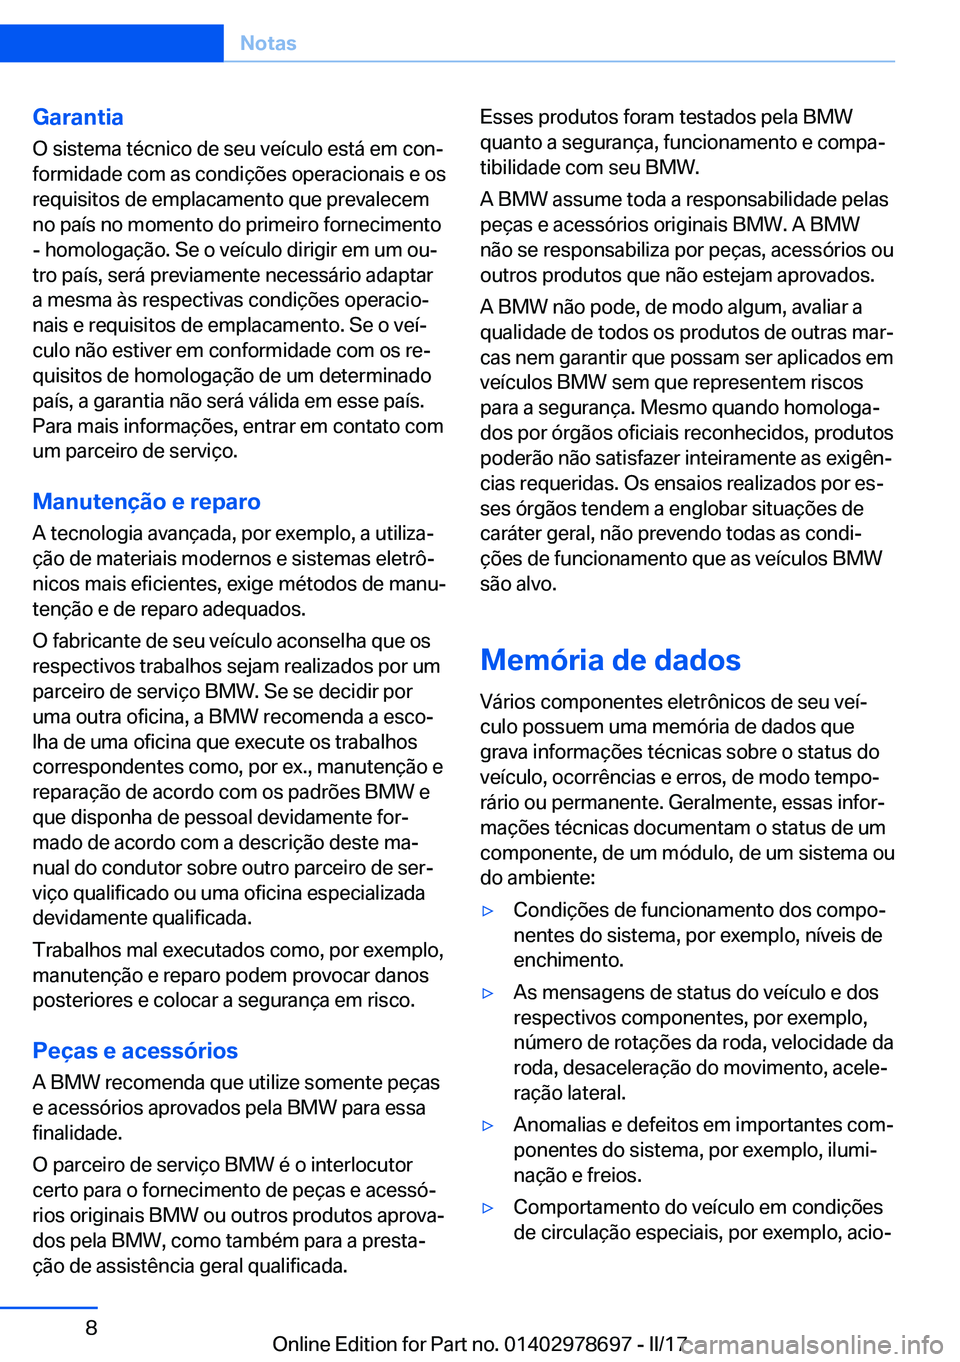 BMW 5 SERIES 2017  Manual do condutor (in Portuguese) �G�a�r�a�n�t�i�a�O� �s�i�s�t�e�m�a� �t�é�c�n�i�c�o� �d�e� �s�e�u� �v�e�